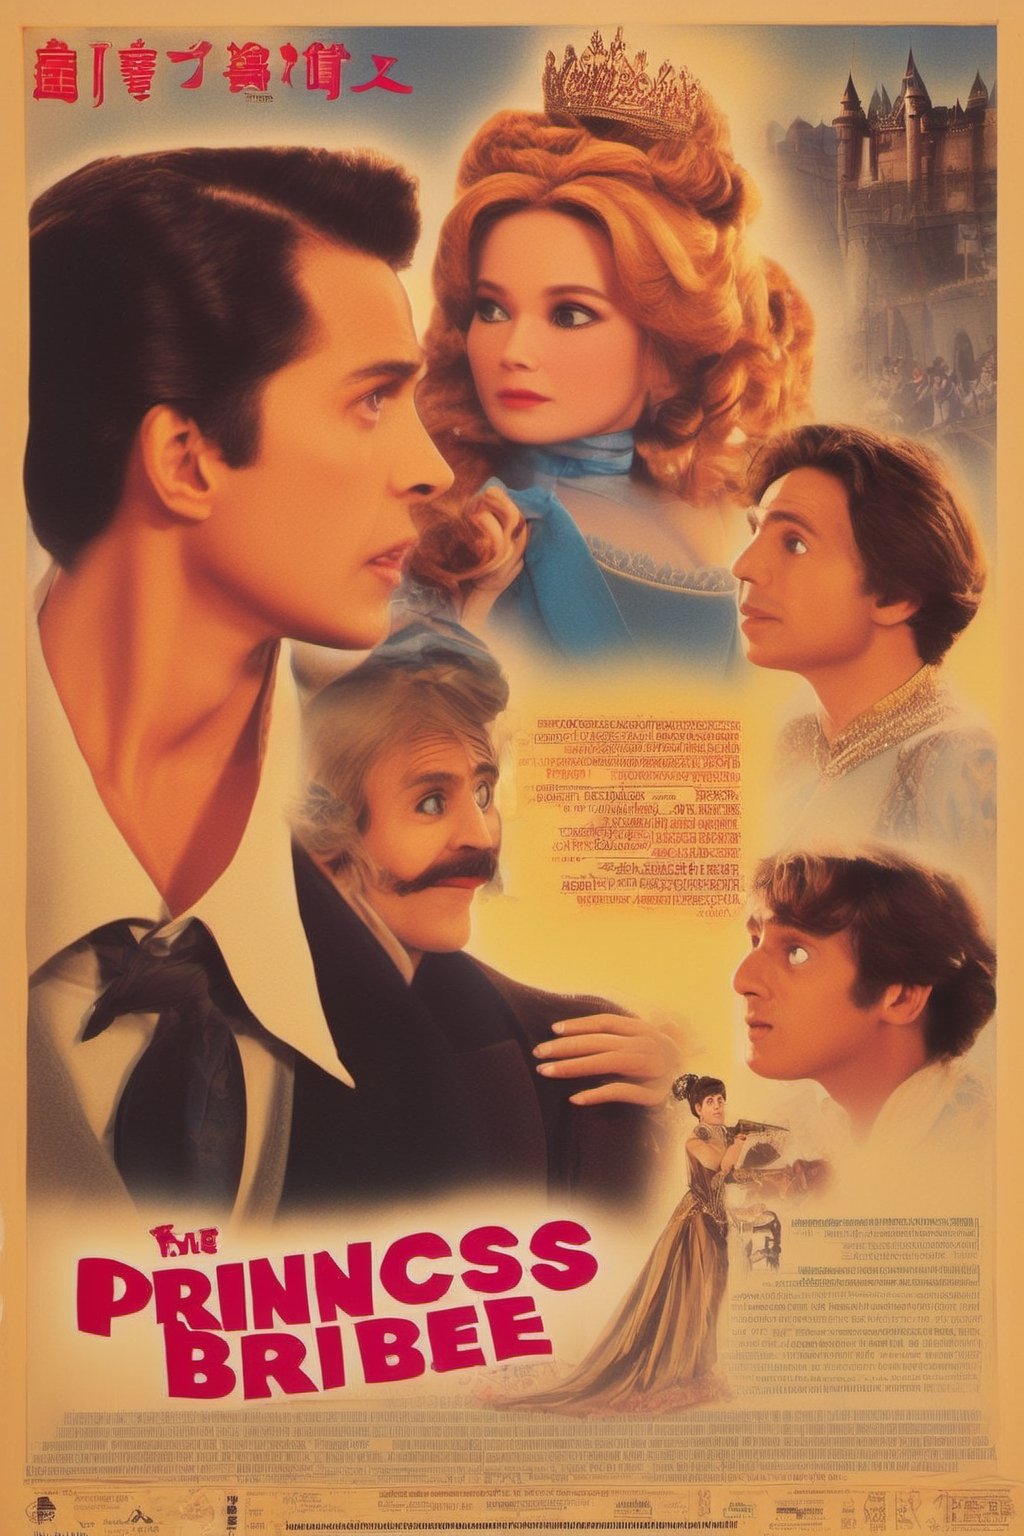 Movie poster of "The Princess Bribe". Movie poster page